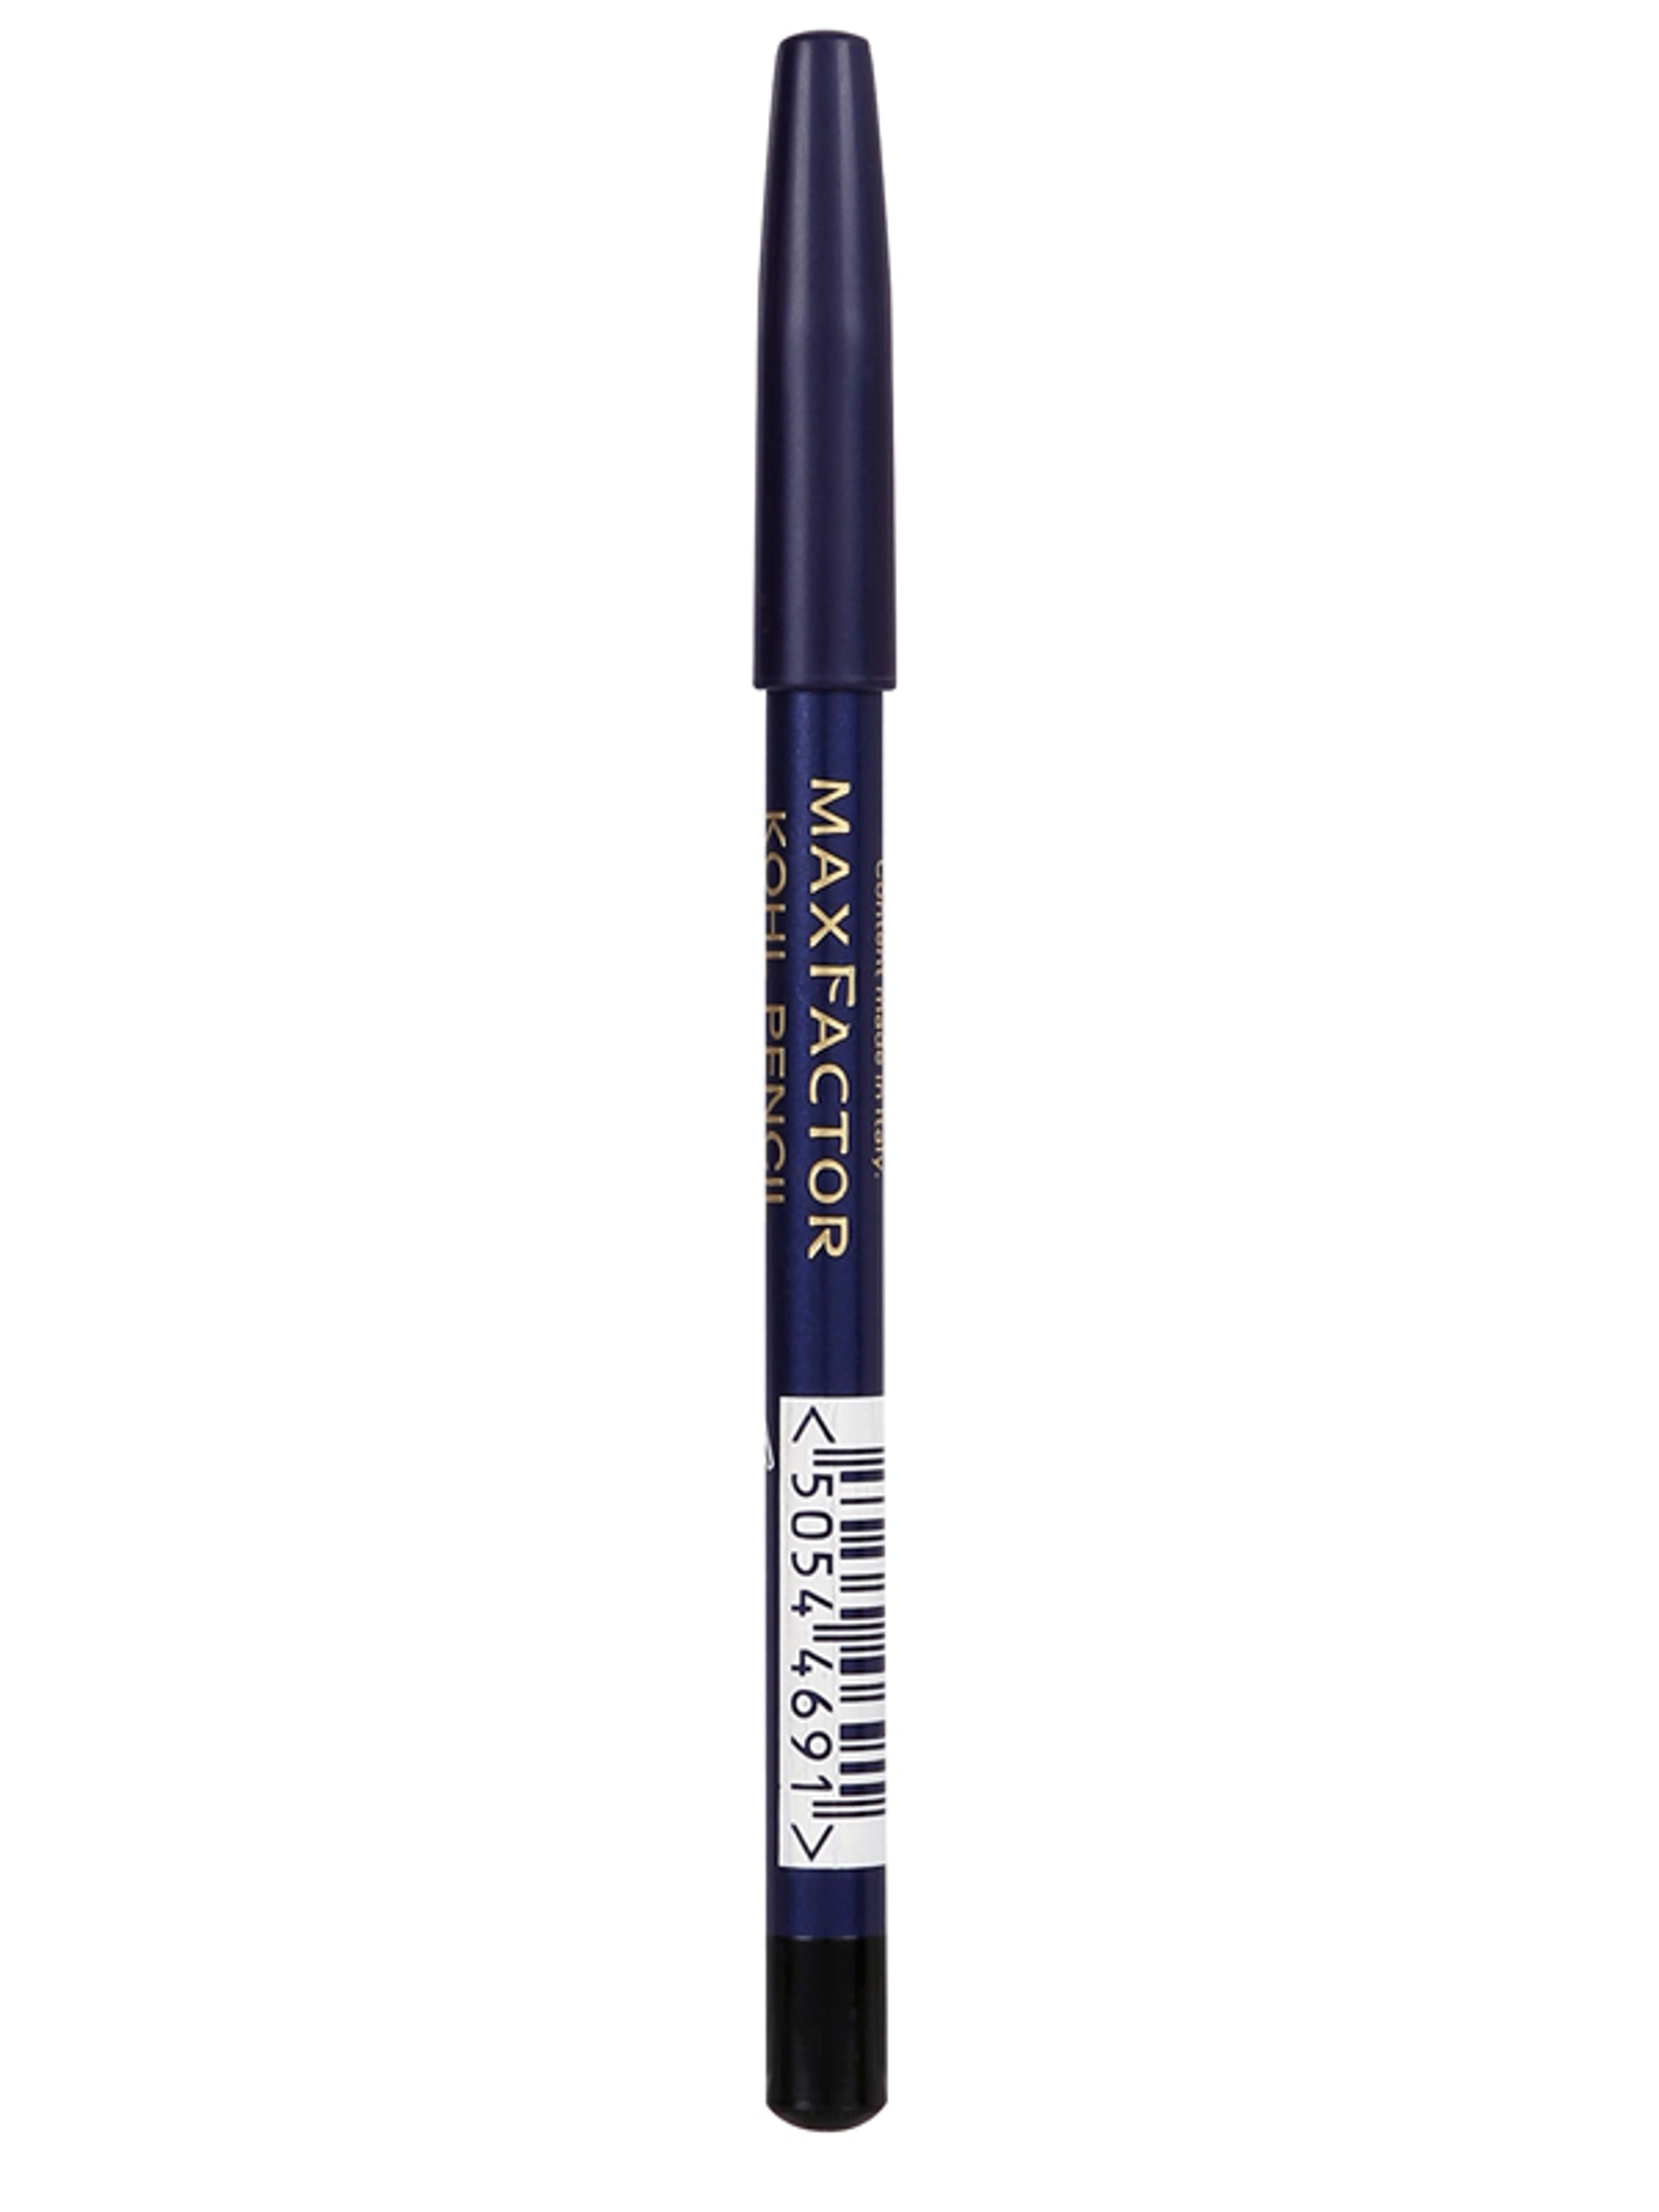 Max Factor Kohl Pencil szemceruza 020, fekete - 1,2 g